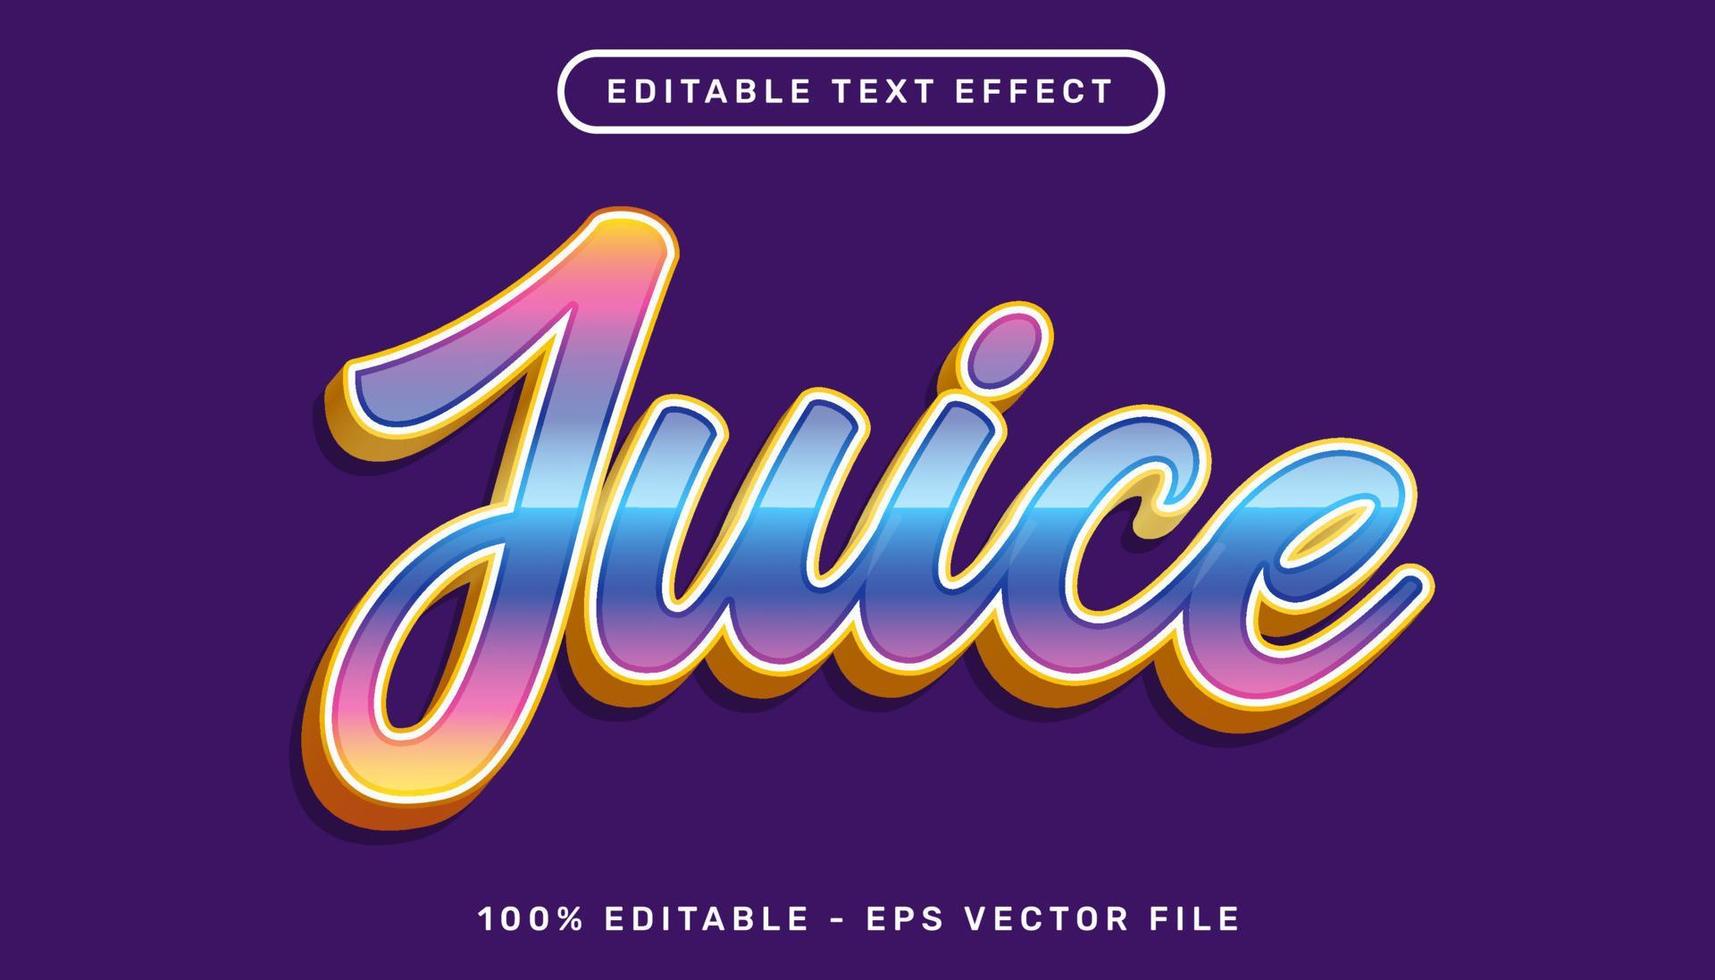 sap retro kleur 3d tekst effect en bewerkbare tekst effect vector